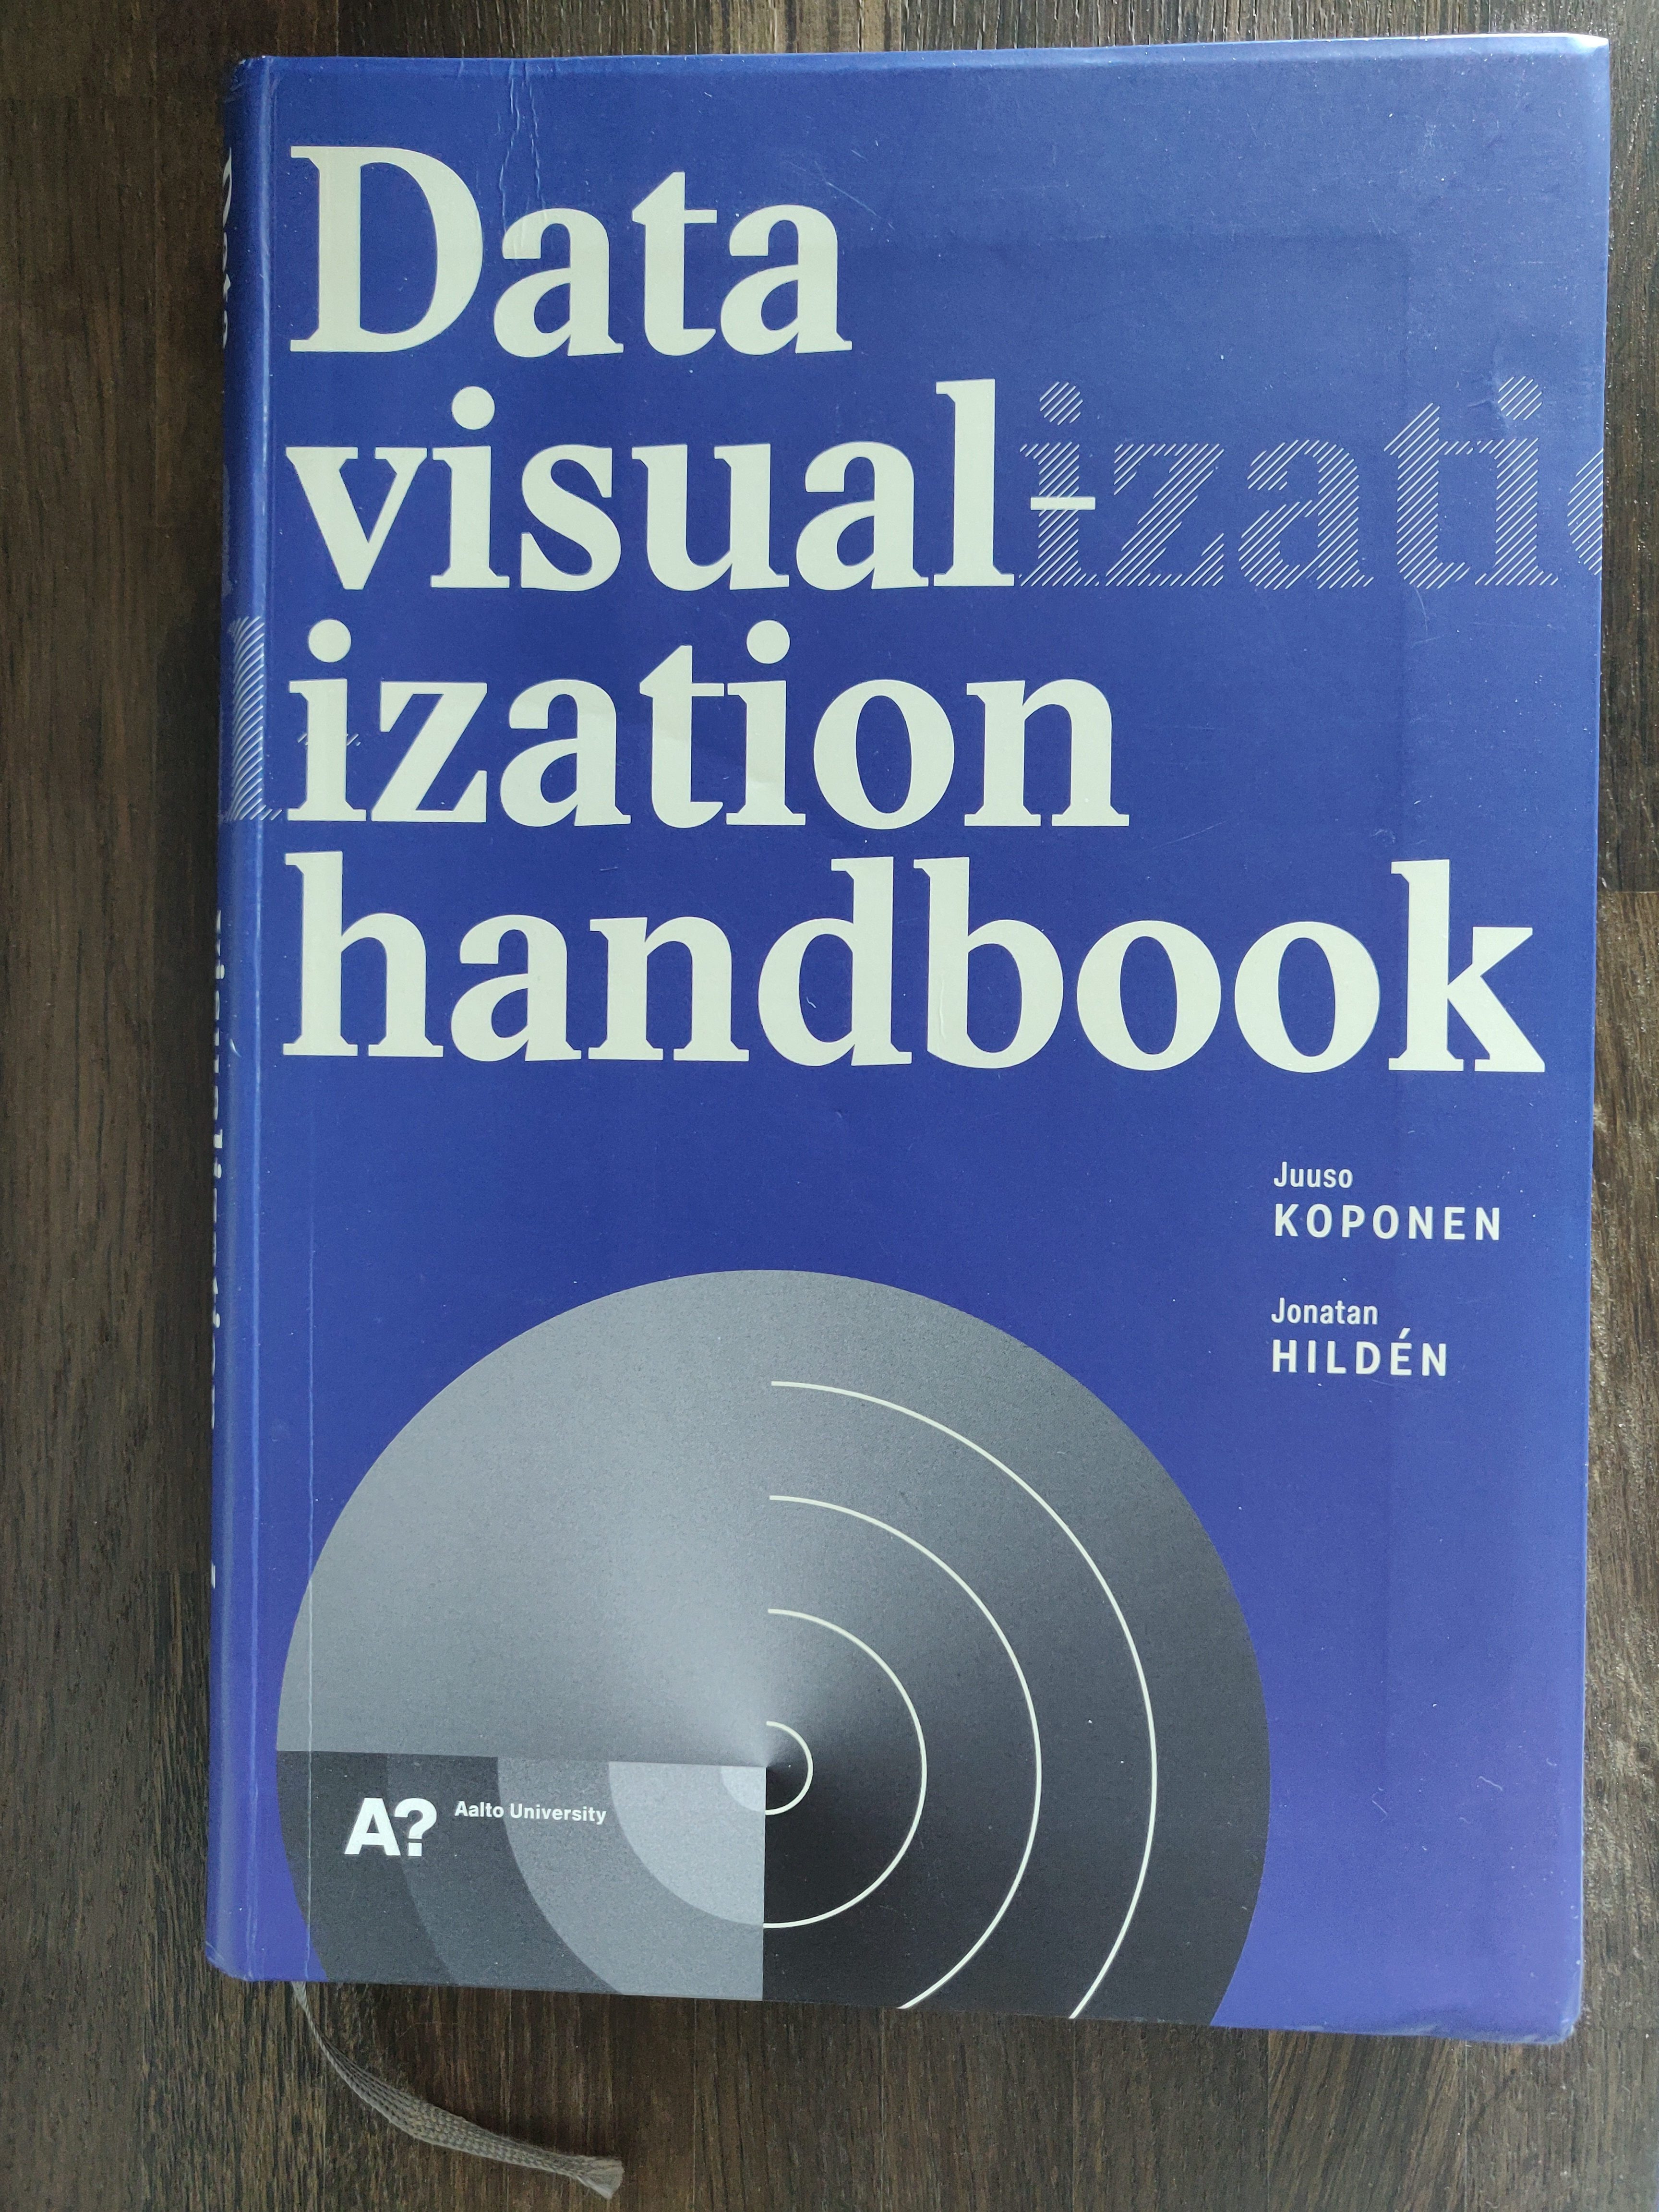 “Data Visualization Handbook” cover